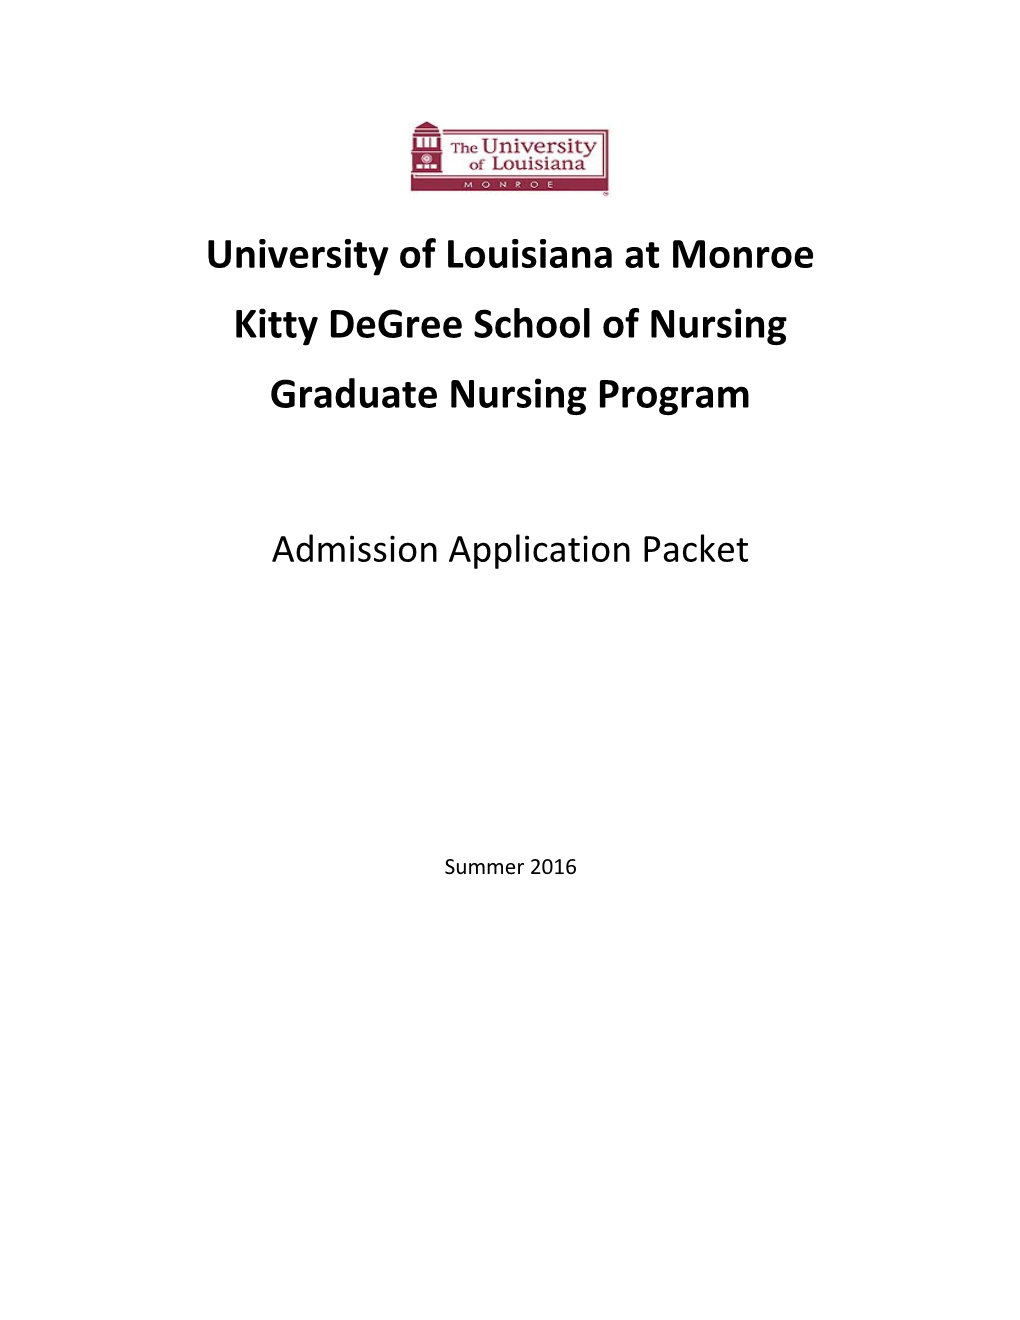 Kitty Degree School of Nursing